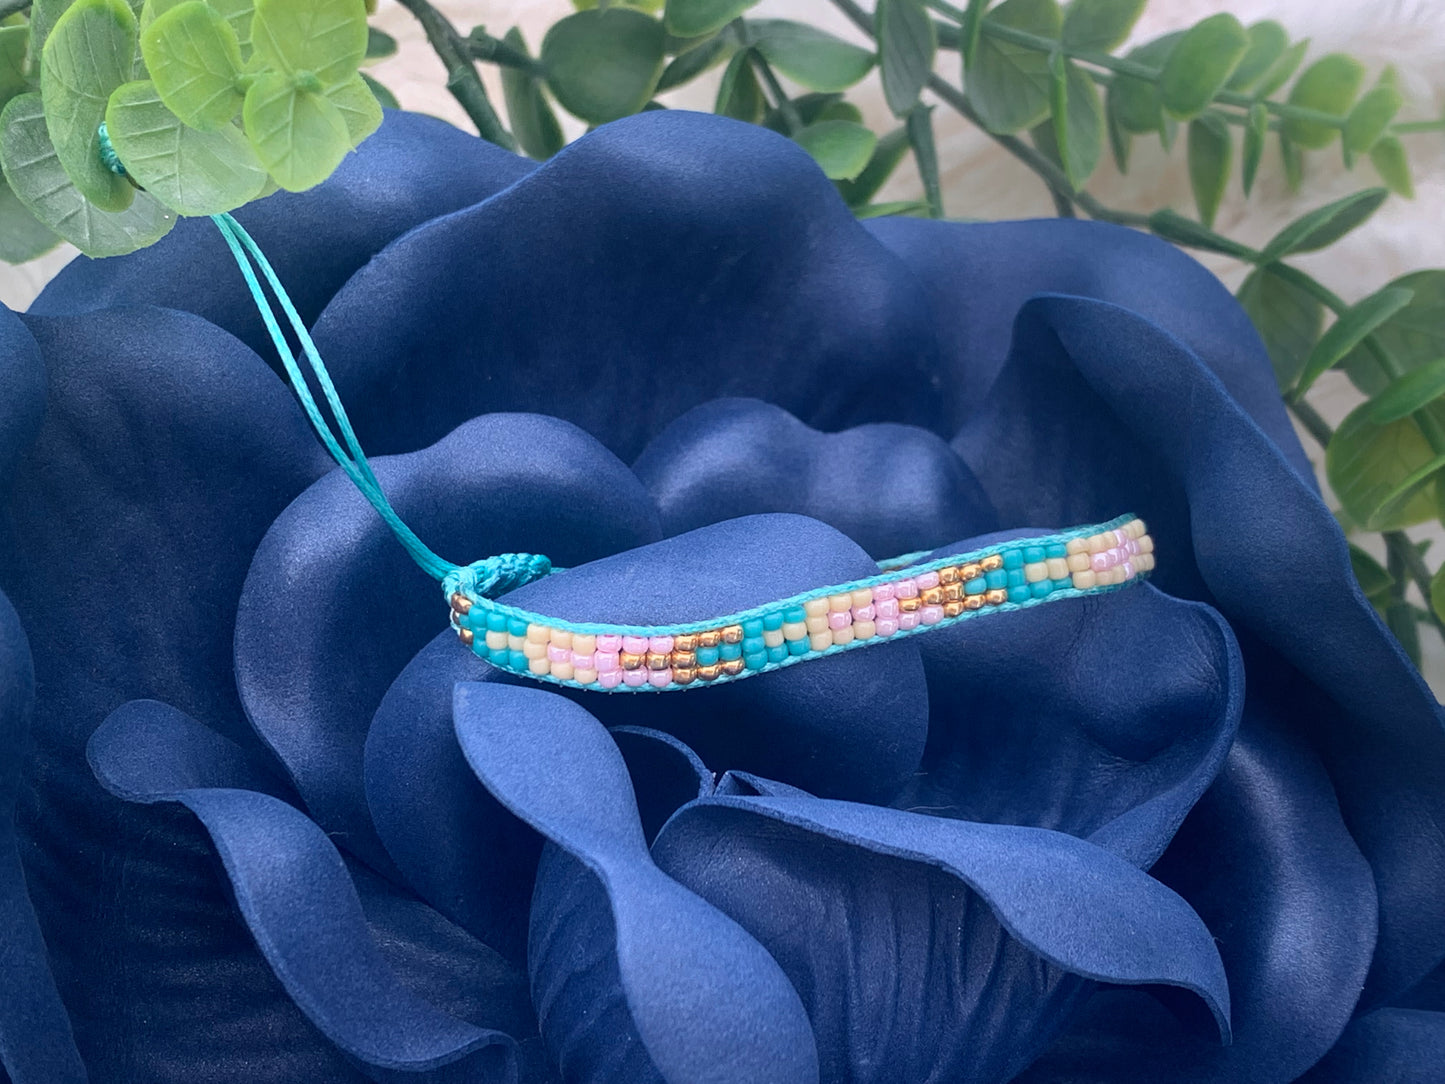 Bohemian Pink, White & Turquoise Glass Beads Beaded Woven Bracelet